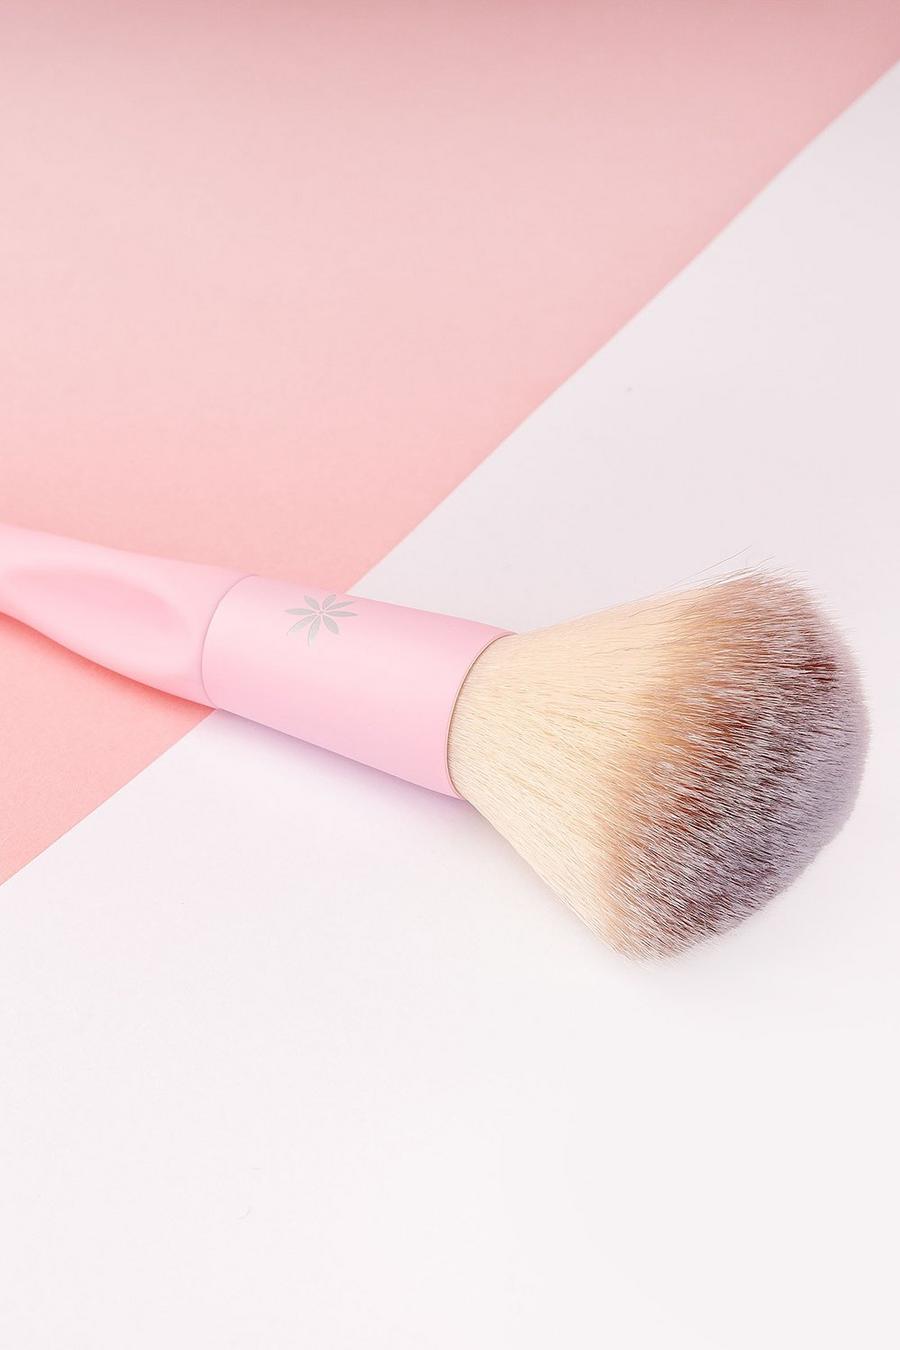 Brushworks - Pinceau à blush, Baby pink image number 1